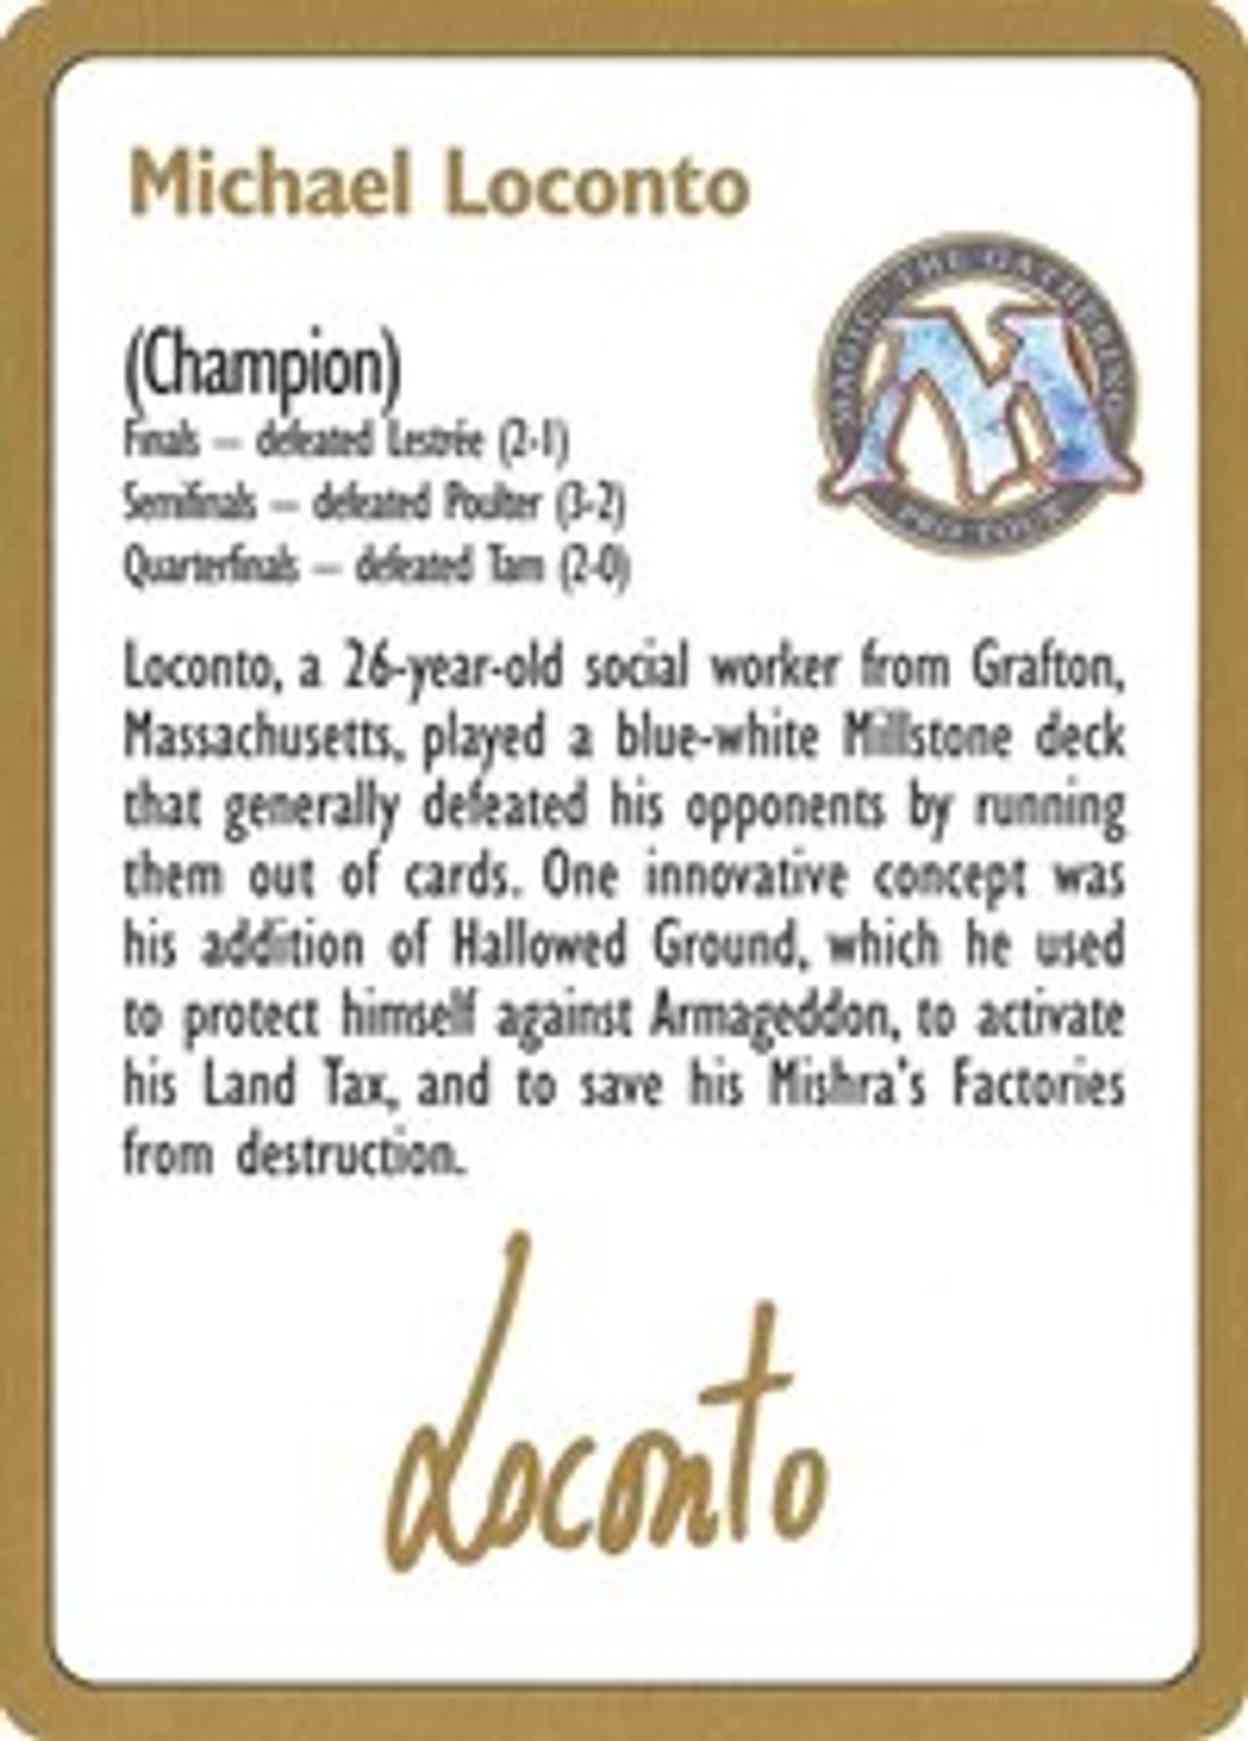 1996 Michael Loconto Biography Card magic card front